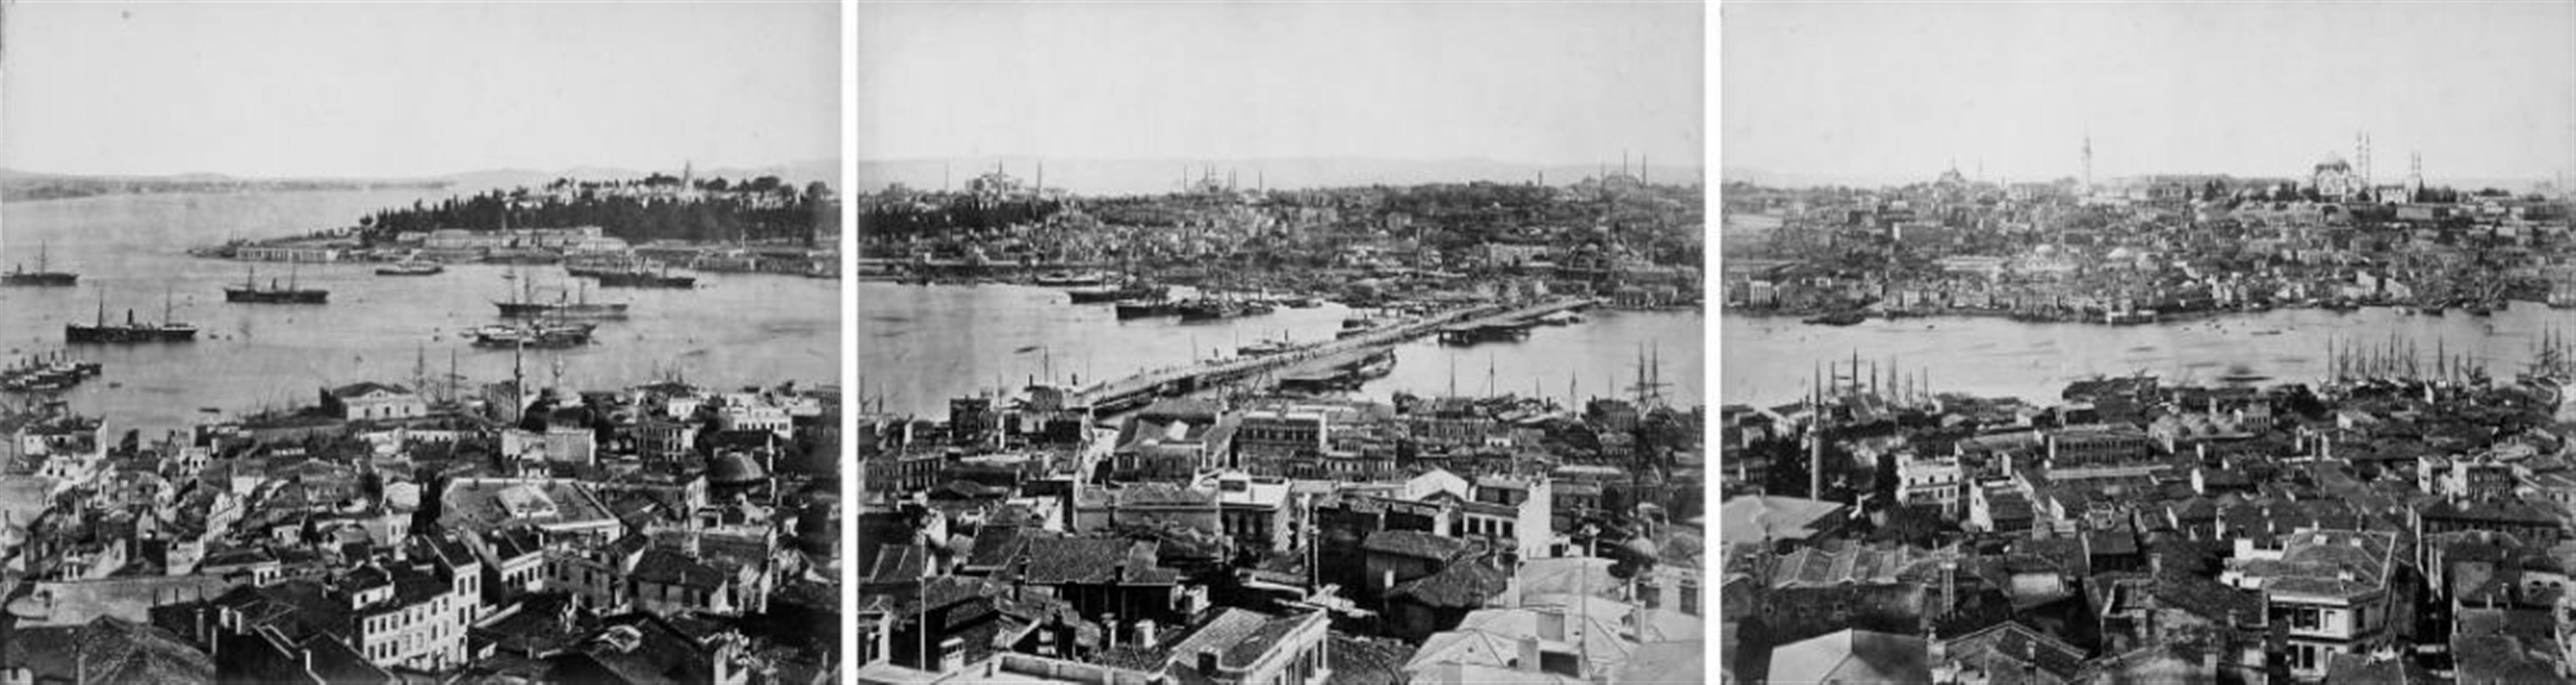 Pascal Sebah - Panorama de Constantinople pris de la Tour de Galata - image-1